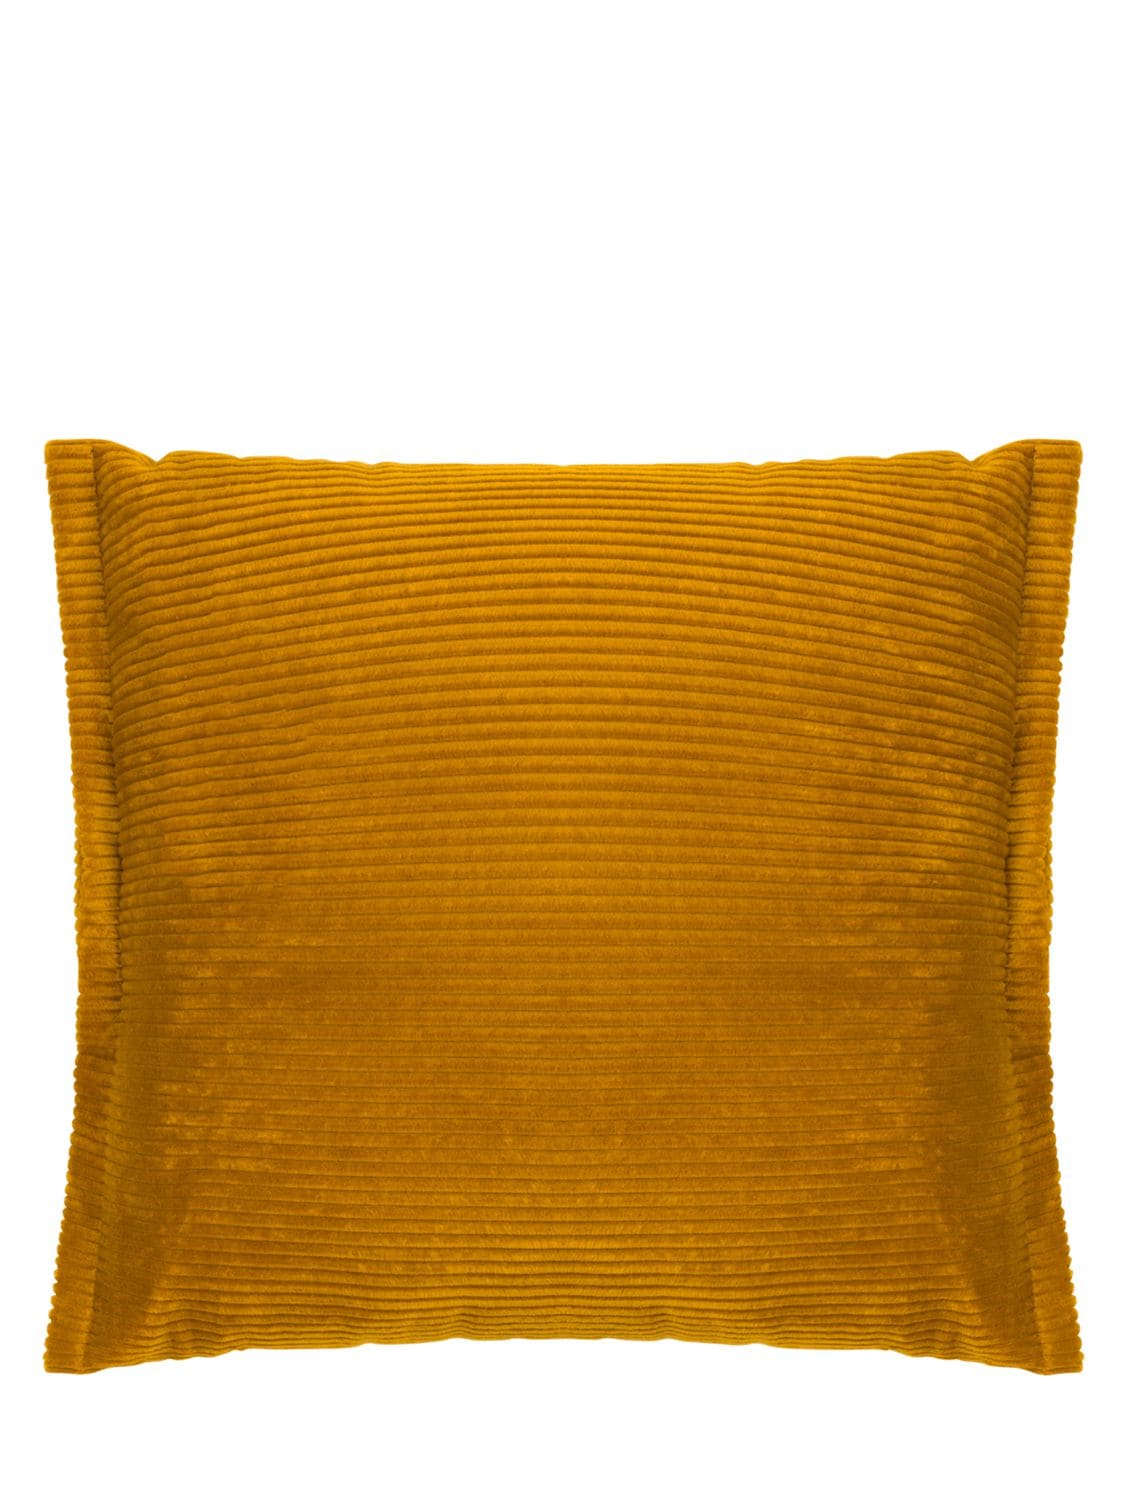 Lanerossi Dueville Cotton Cushion In Orange